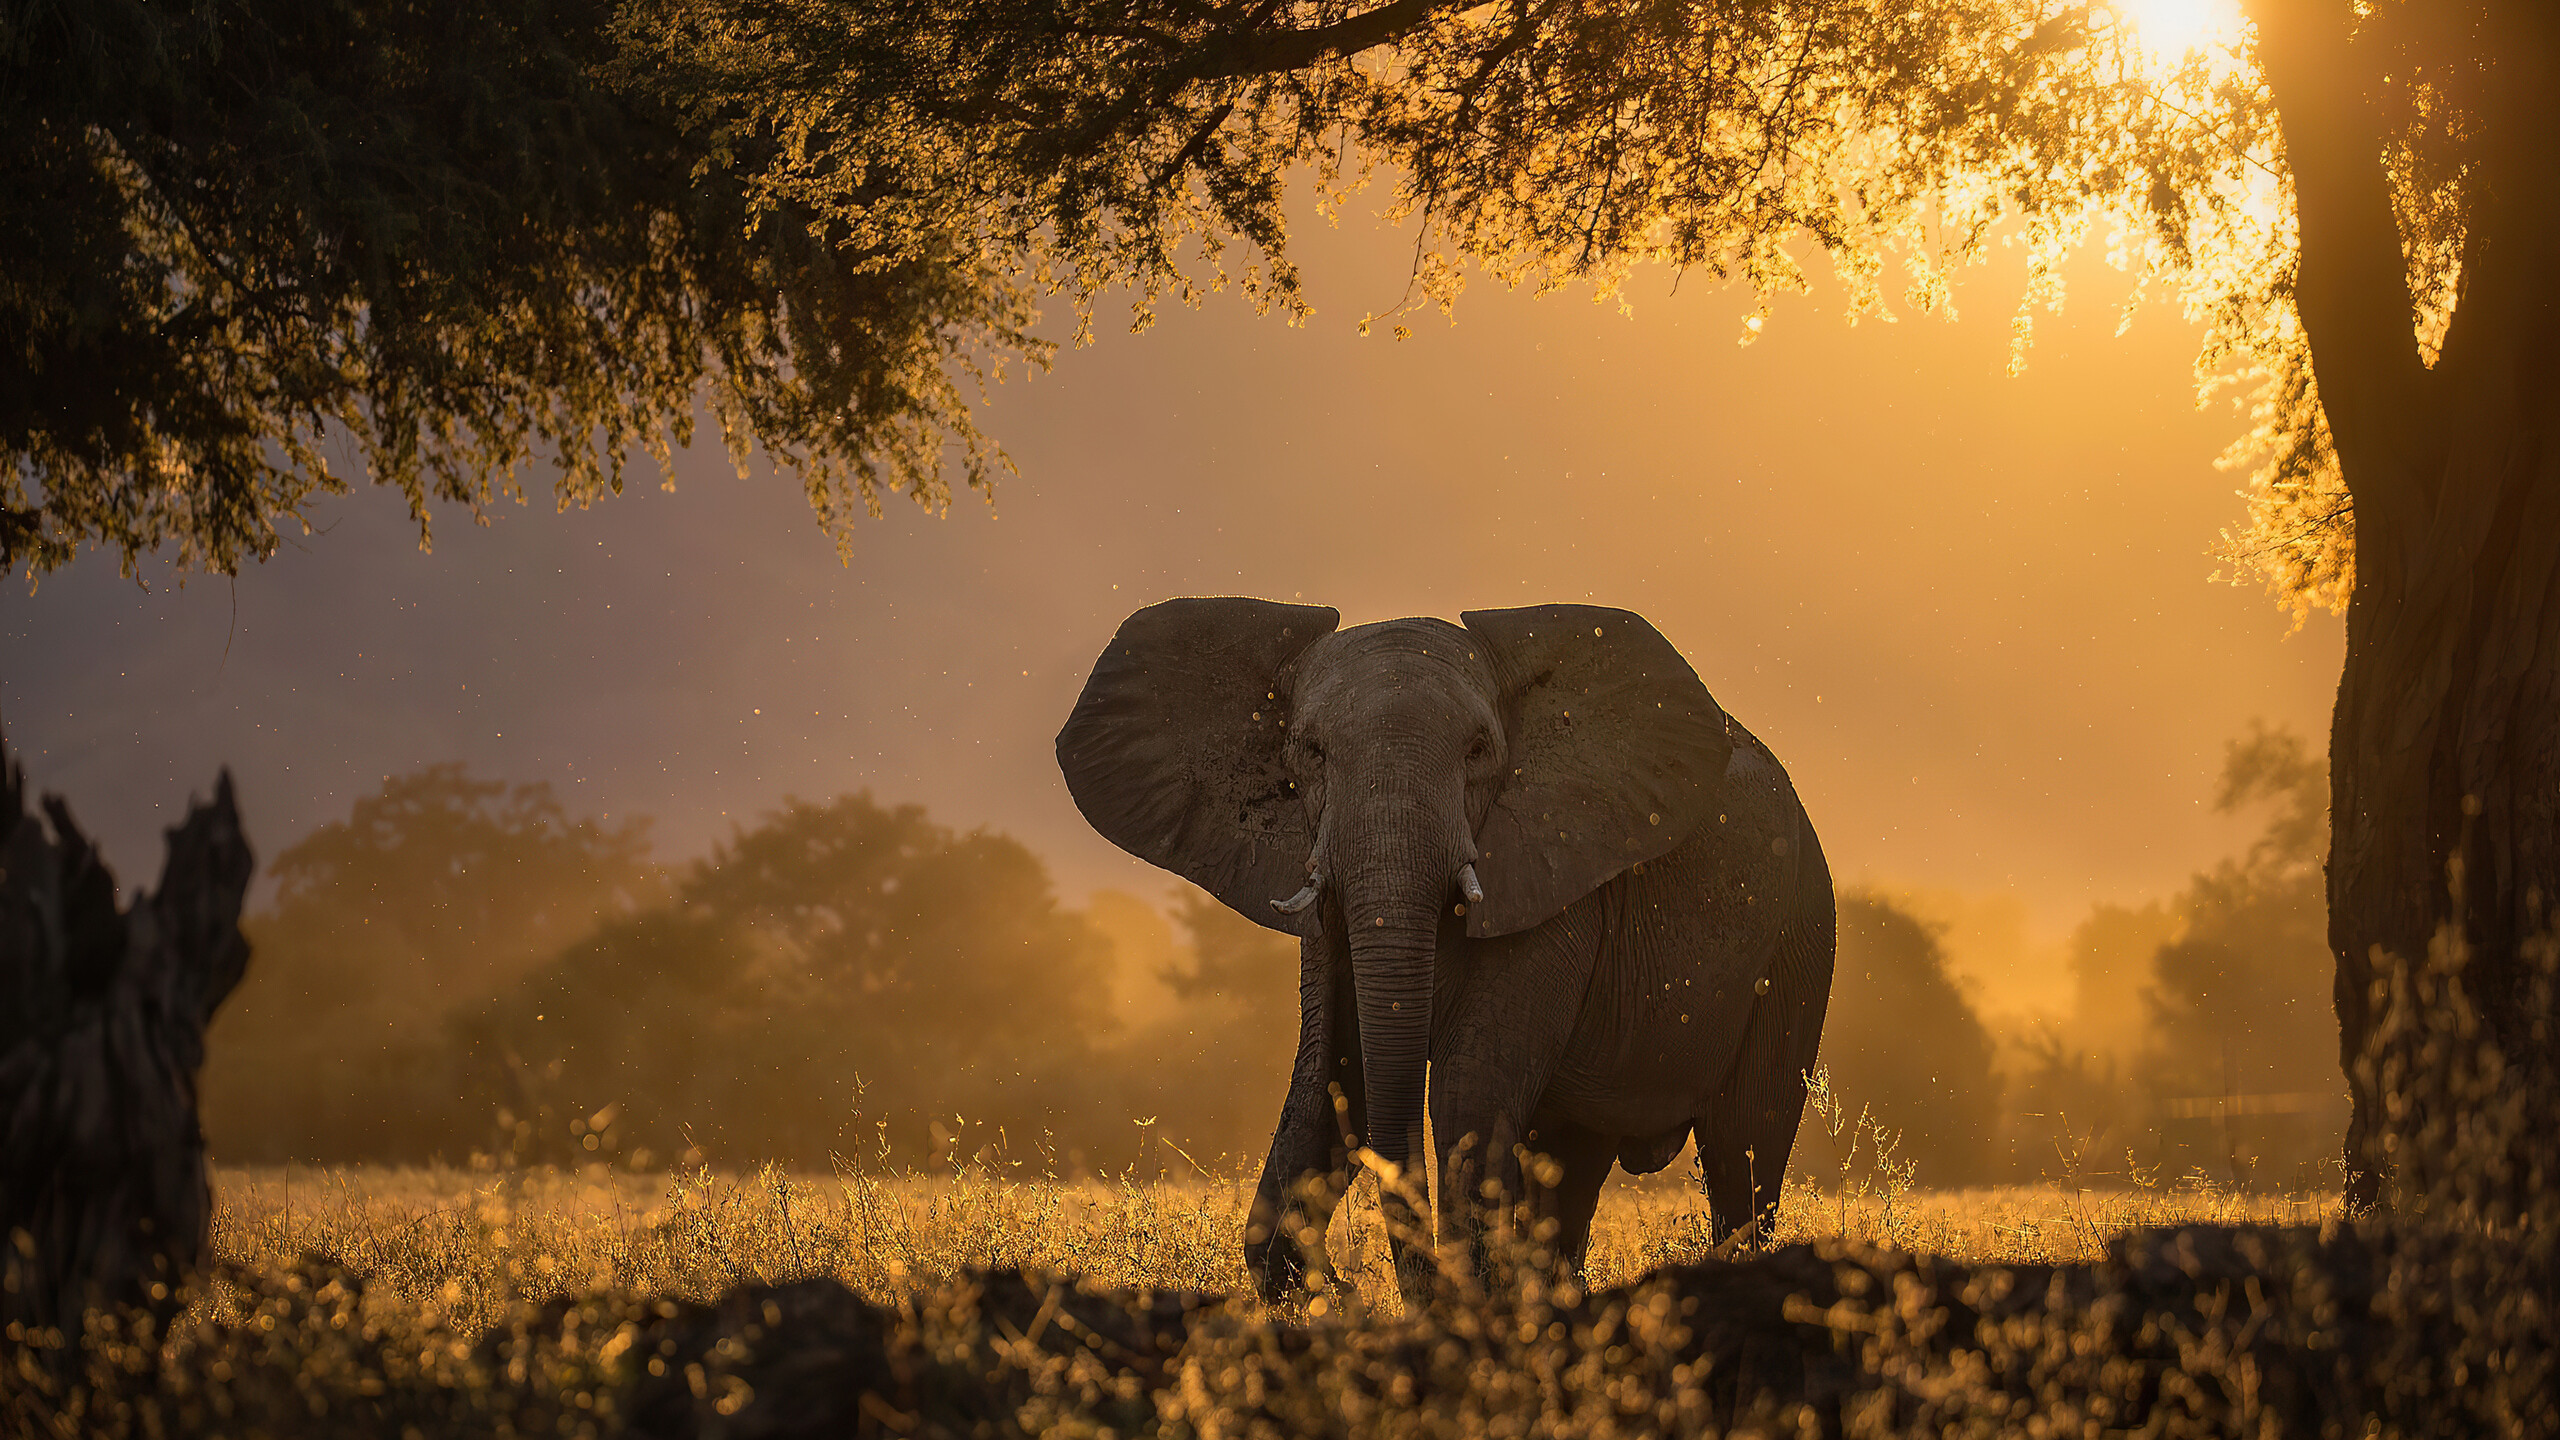 Elephant: Elephants use infrasound and seismic communication over long distances. 2560x1440 HD Wallpaper.